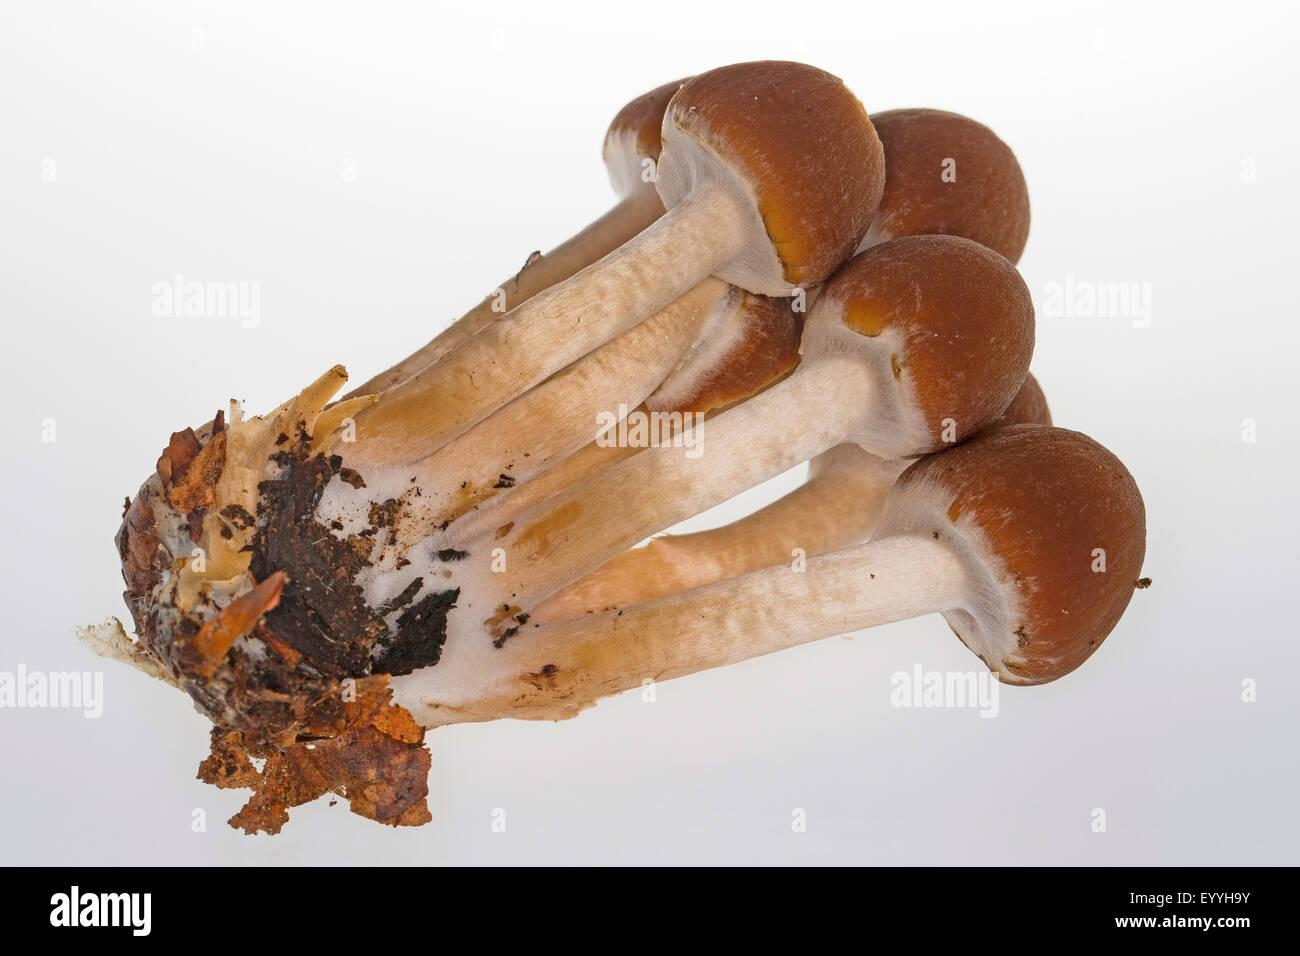 Common stump brittlestem (Psathyrella piluliformis, Psathyrelle hydrophila), cutout, Germany Stock Photo